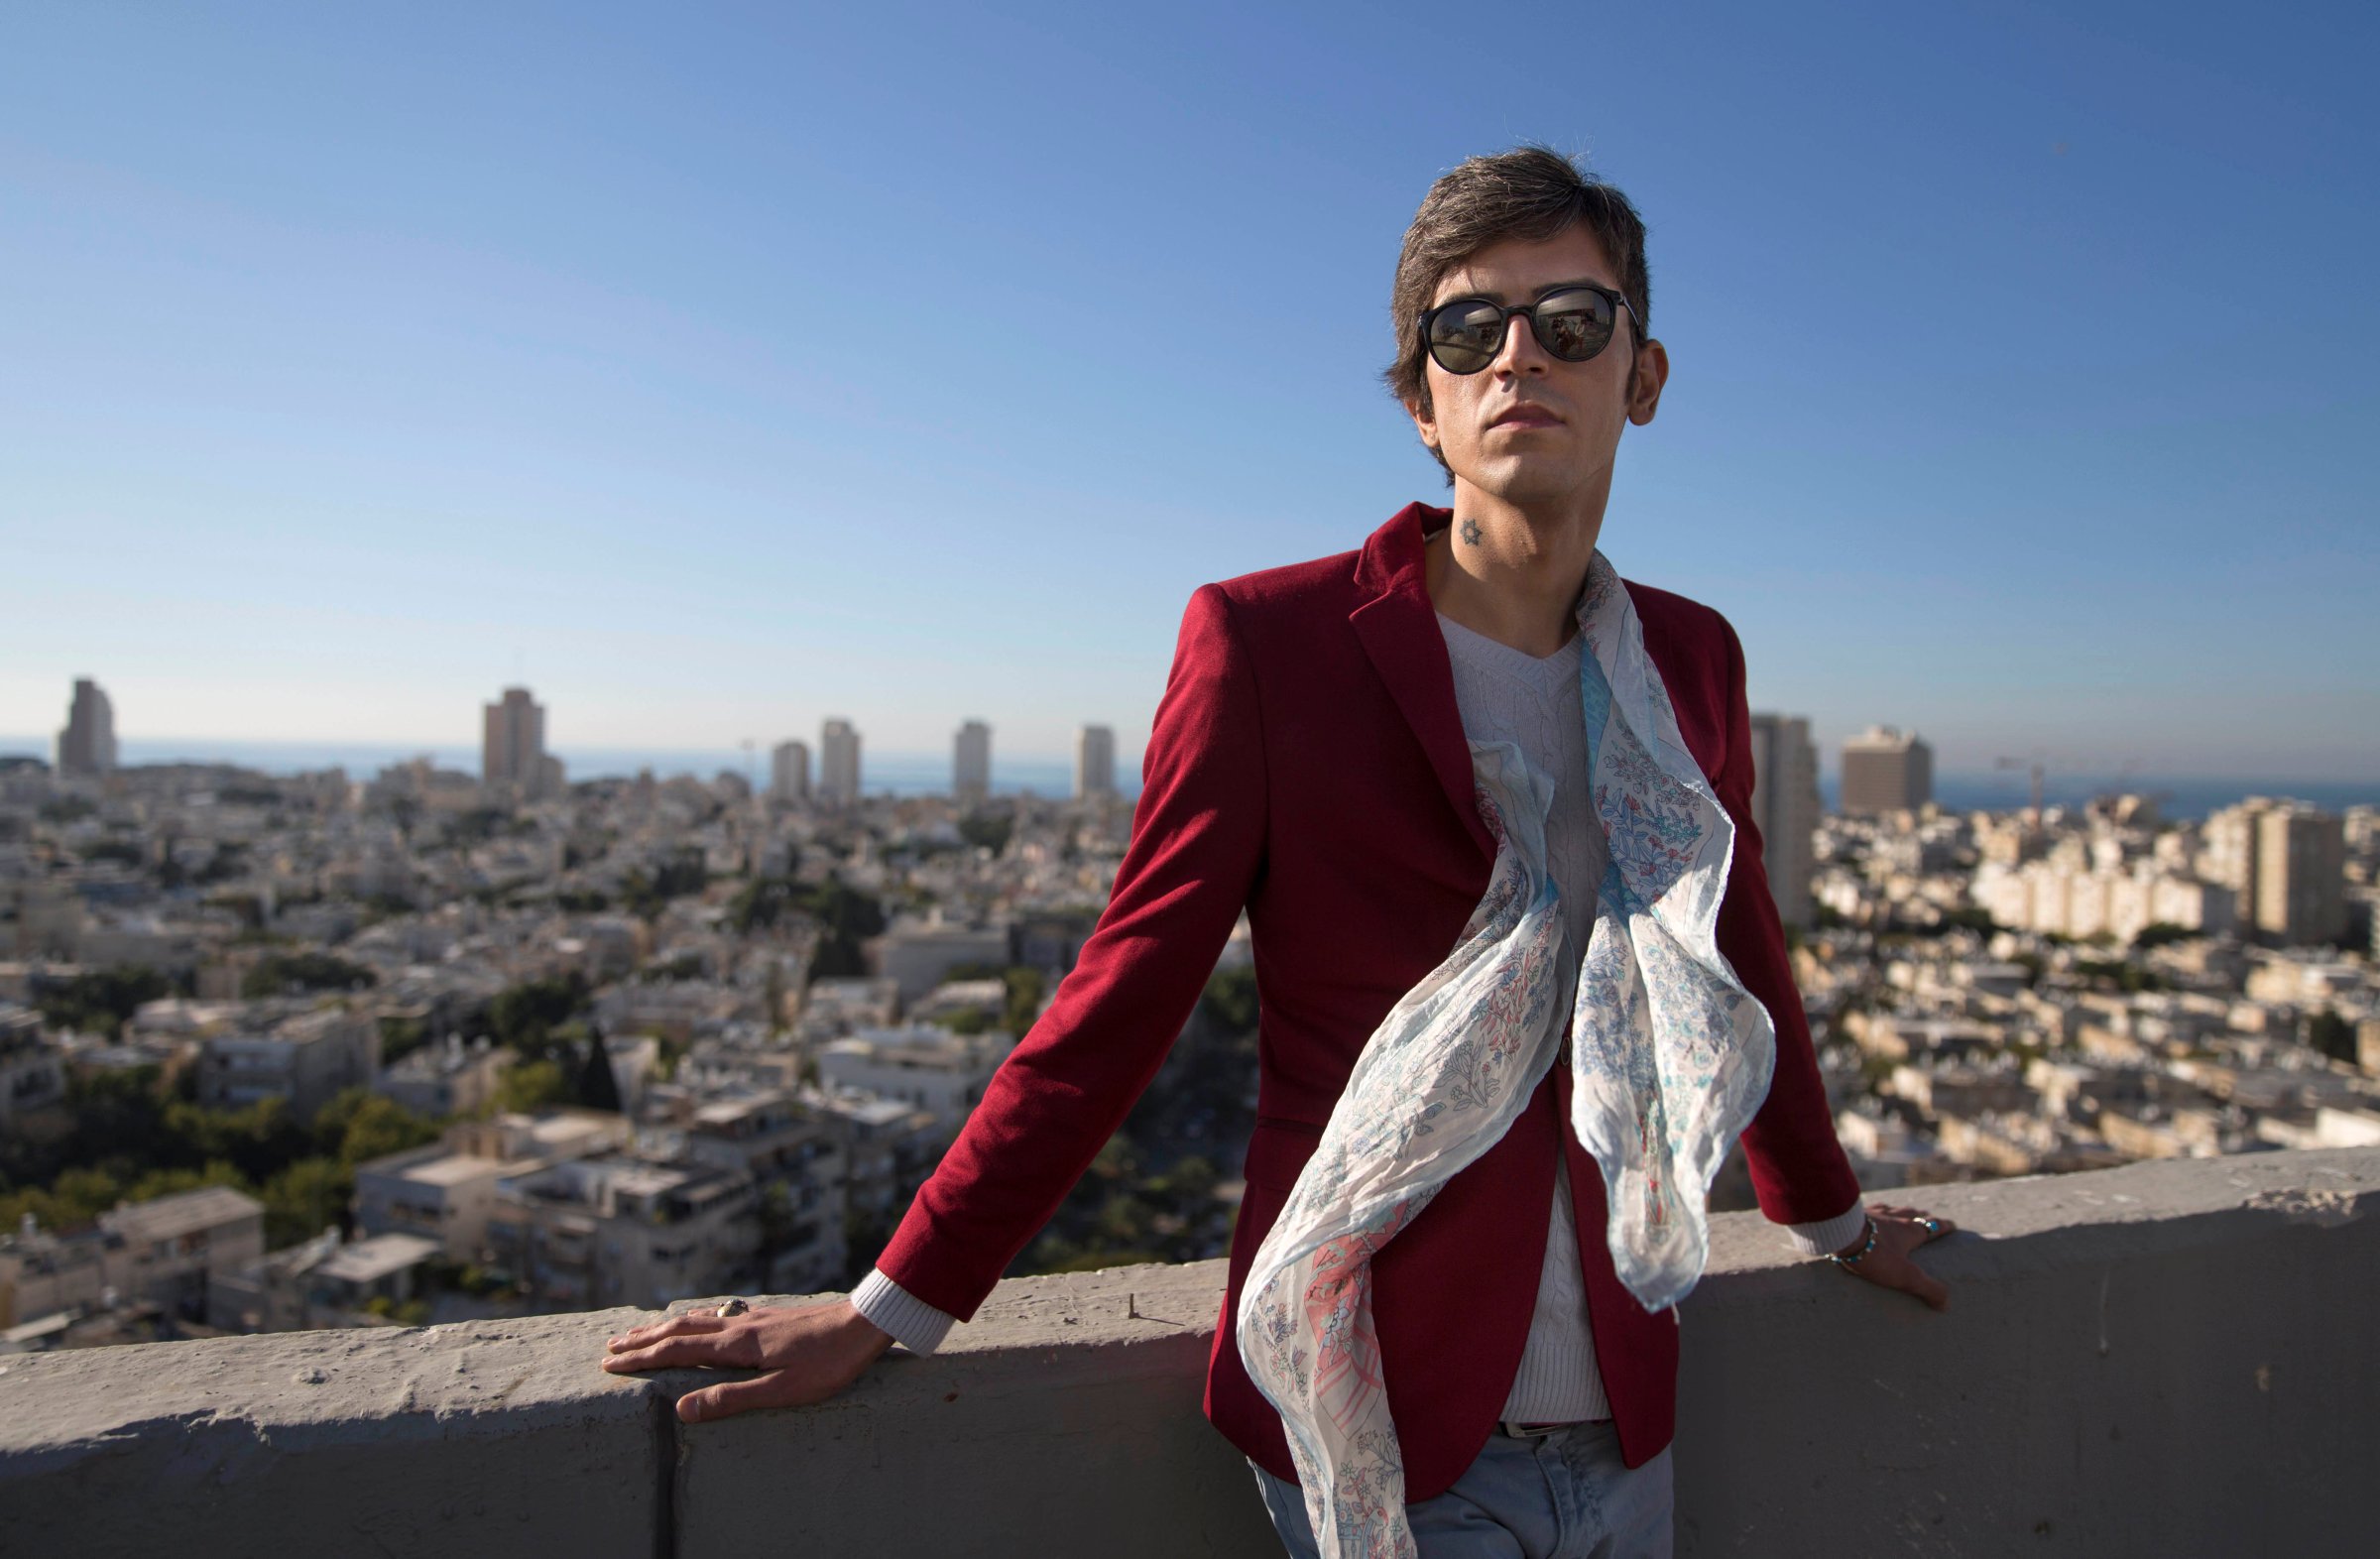 Iranian poet, Payam Feili poses for a photograph in Tel Aviv, Israel on Dec. 9, 2015.